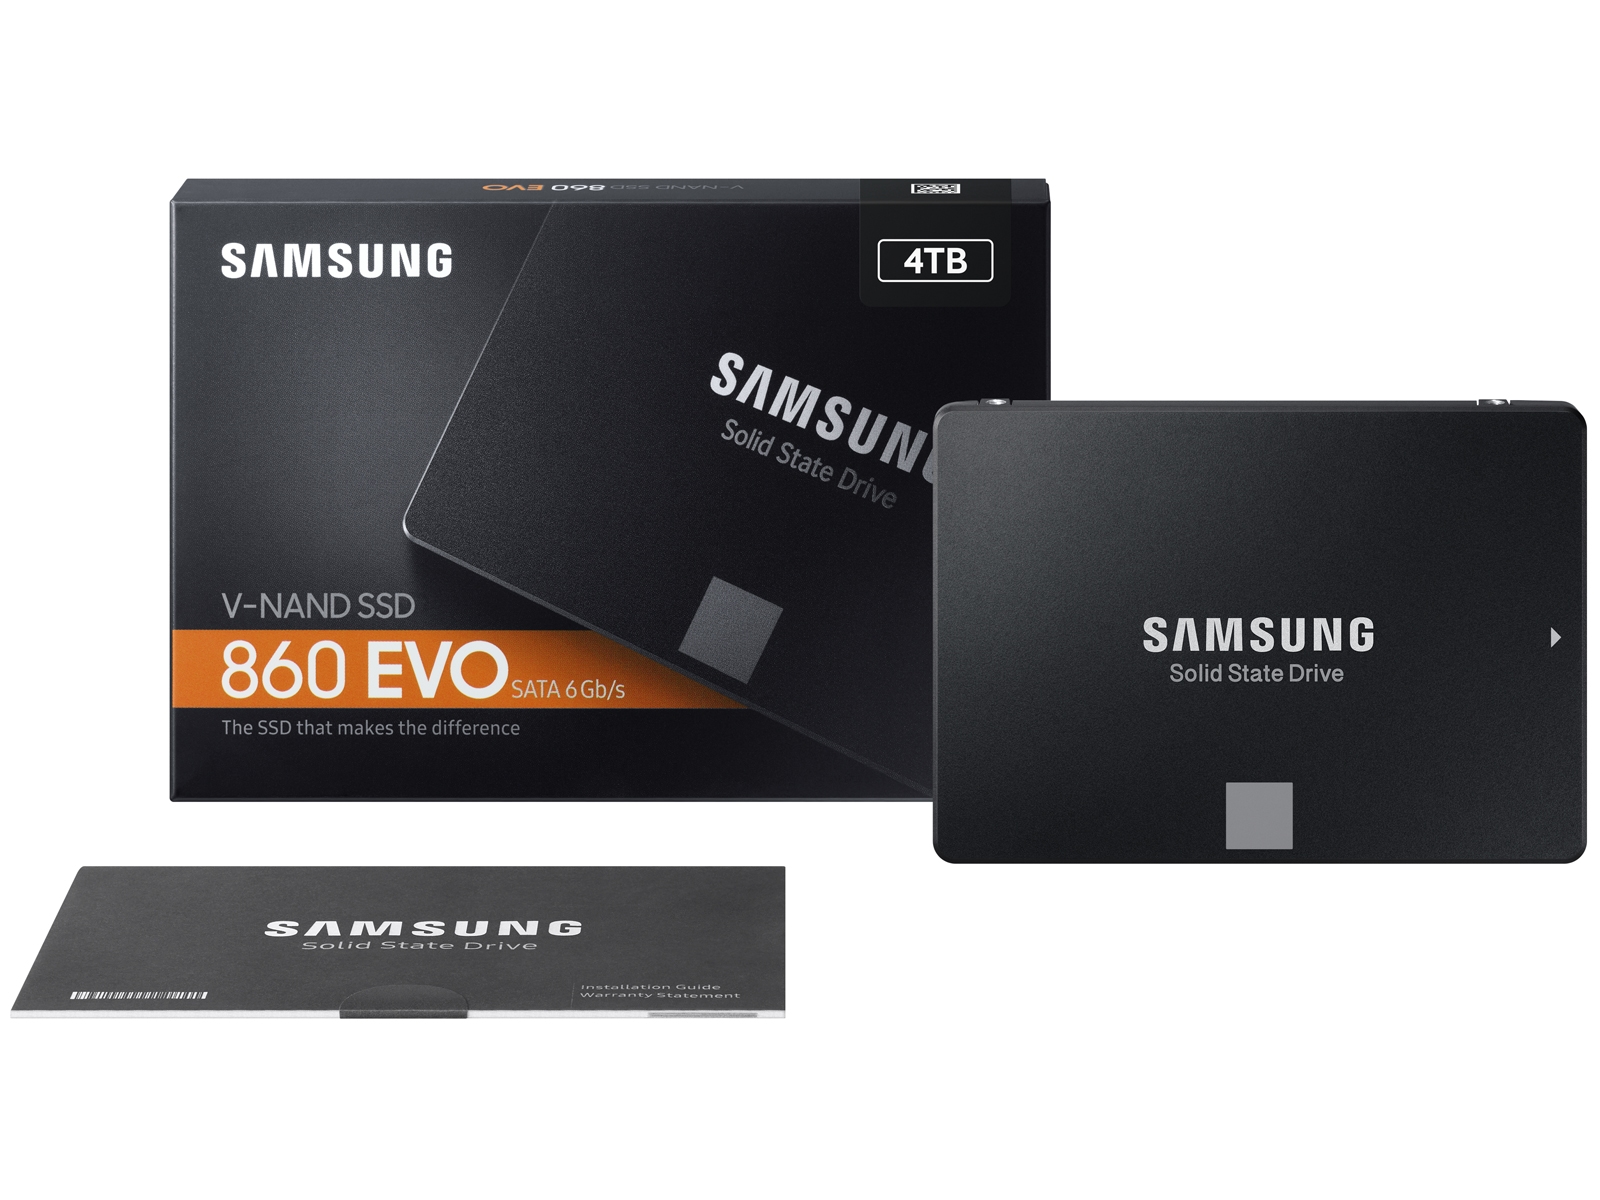 SSD 860 EVO 2.5 inch SATA III 4TB Memory & Storage - MZ-76E4T0B/AM 